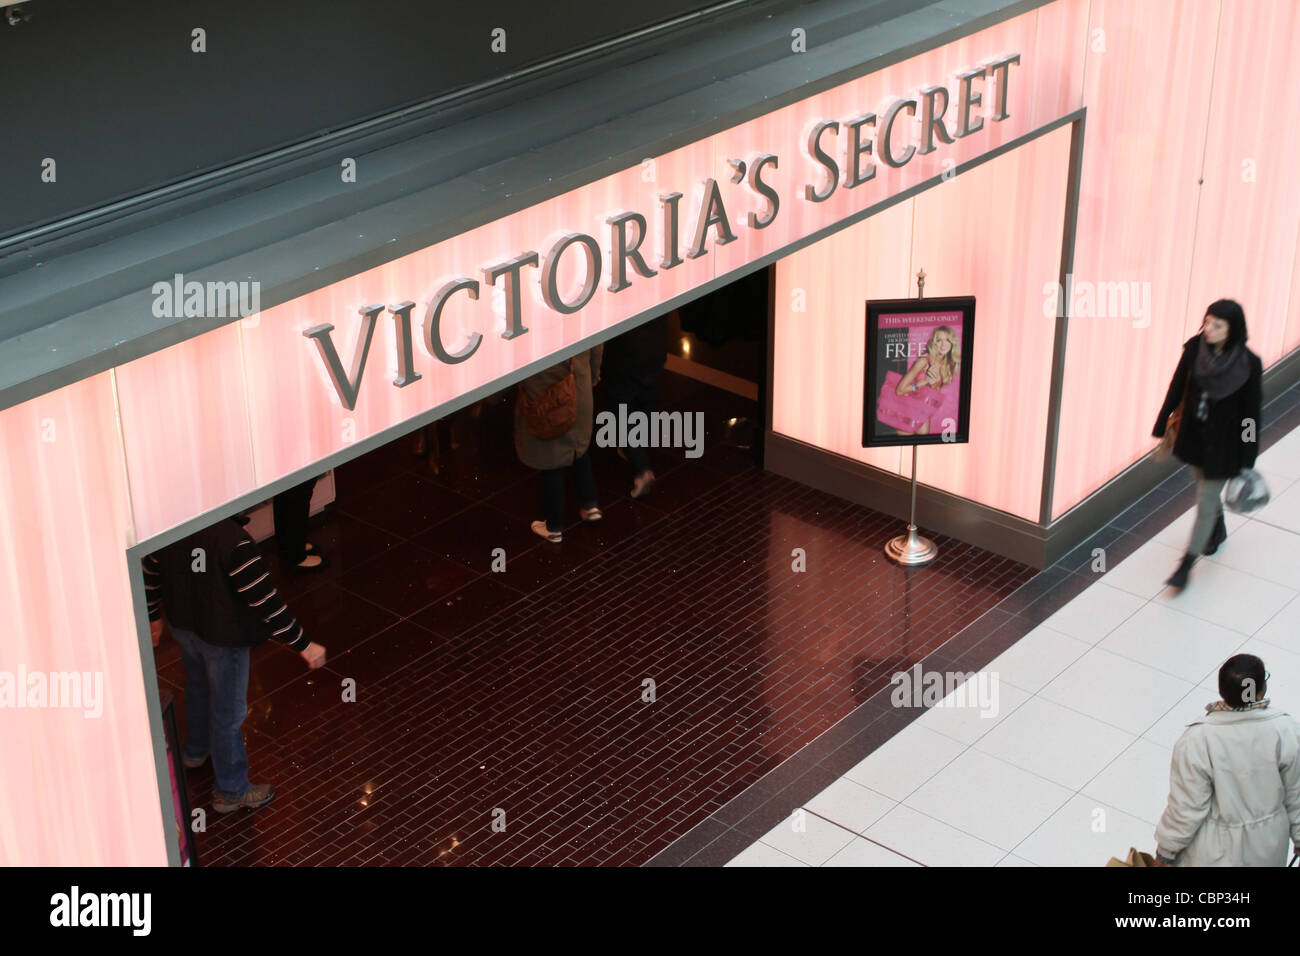 victoria's secret pink store front entrance Stock Photo